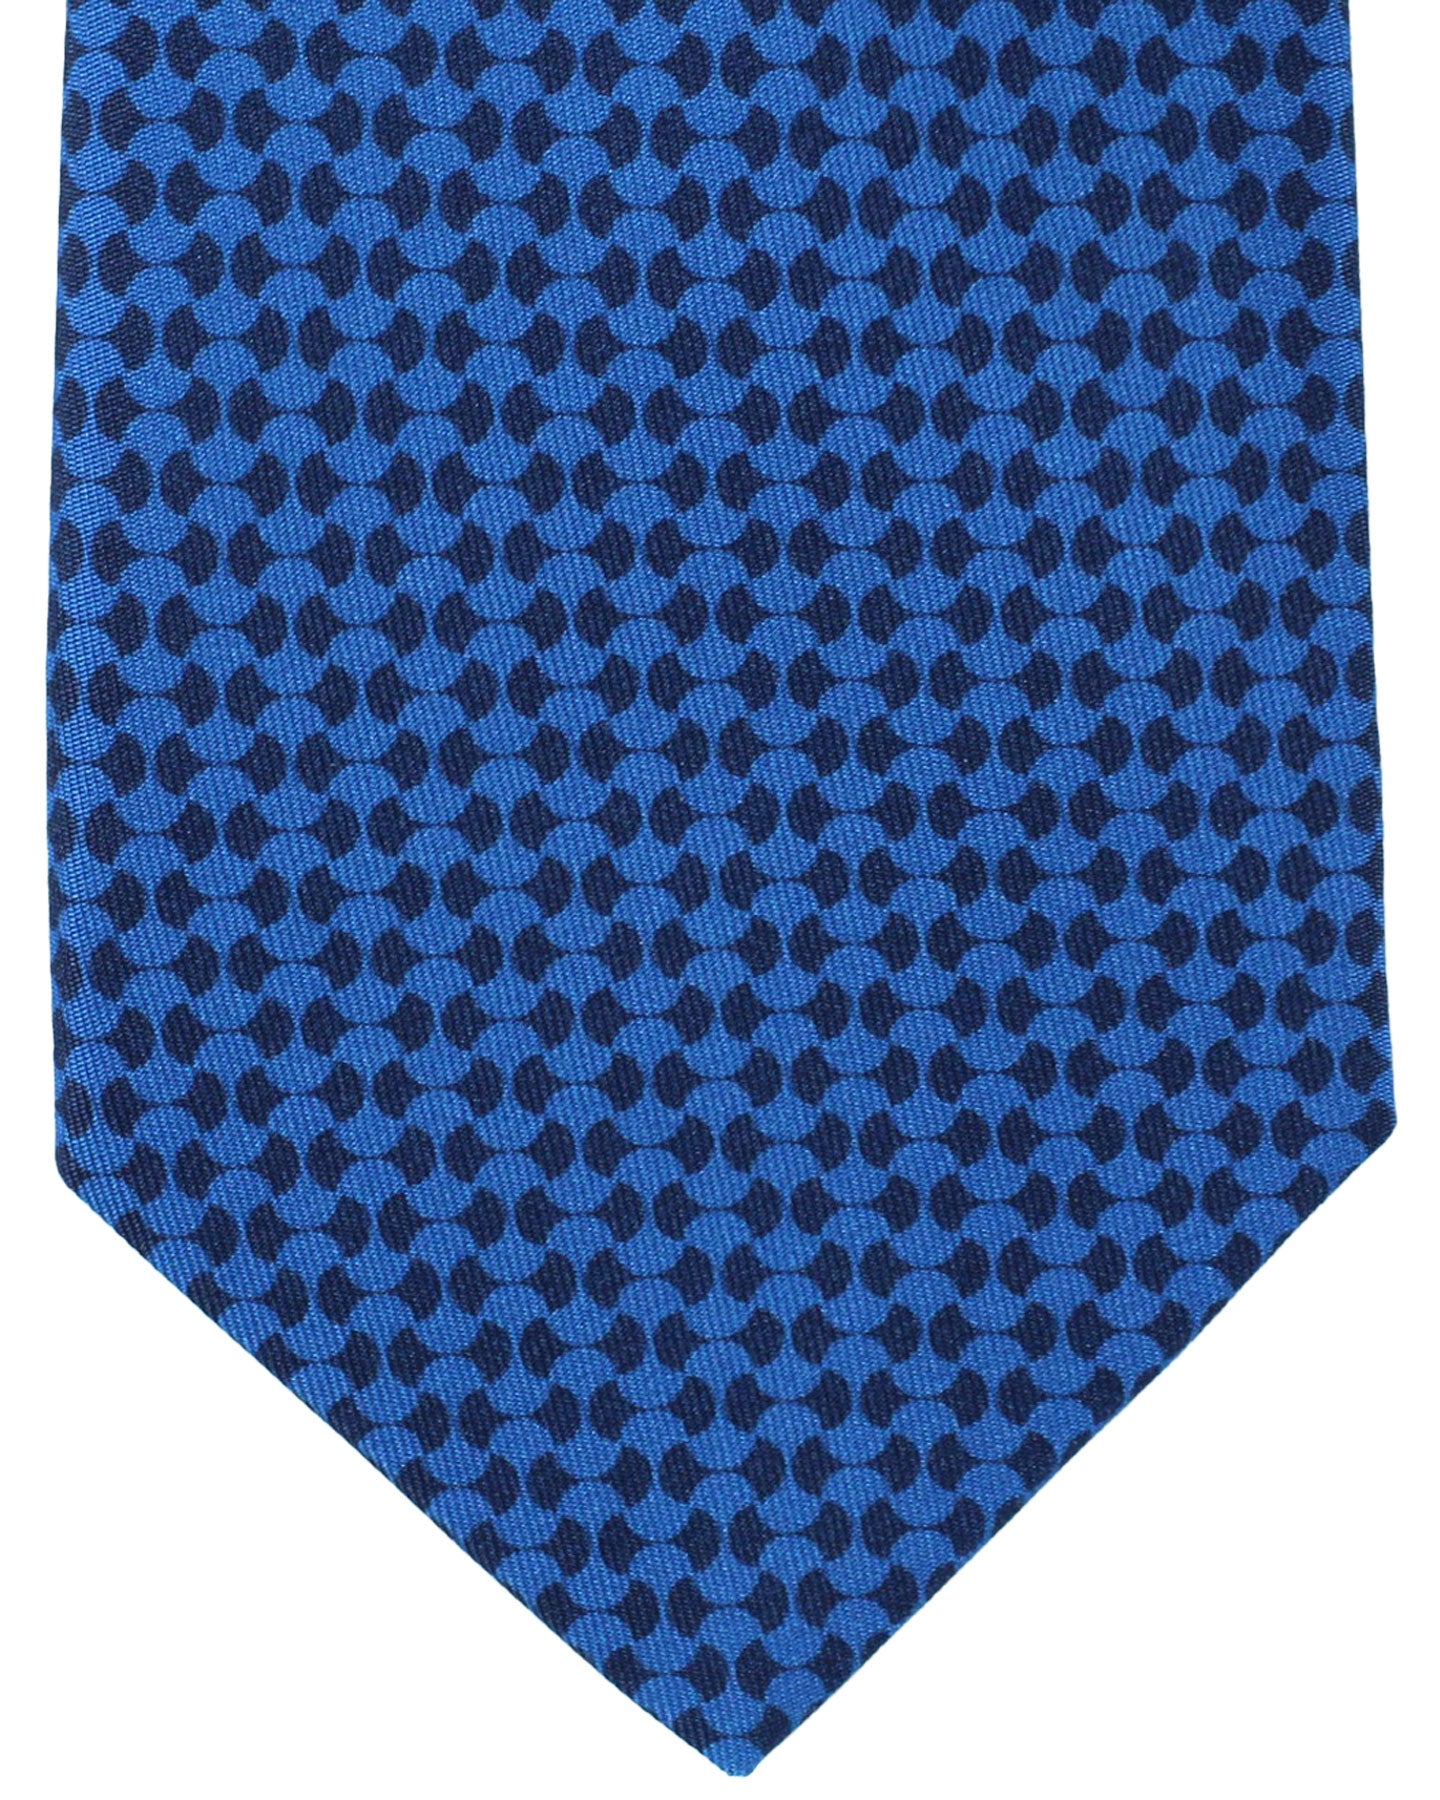 Battistoni Silk Tie Royal Blue Navy Geometric